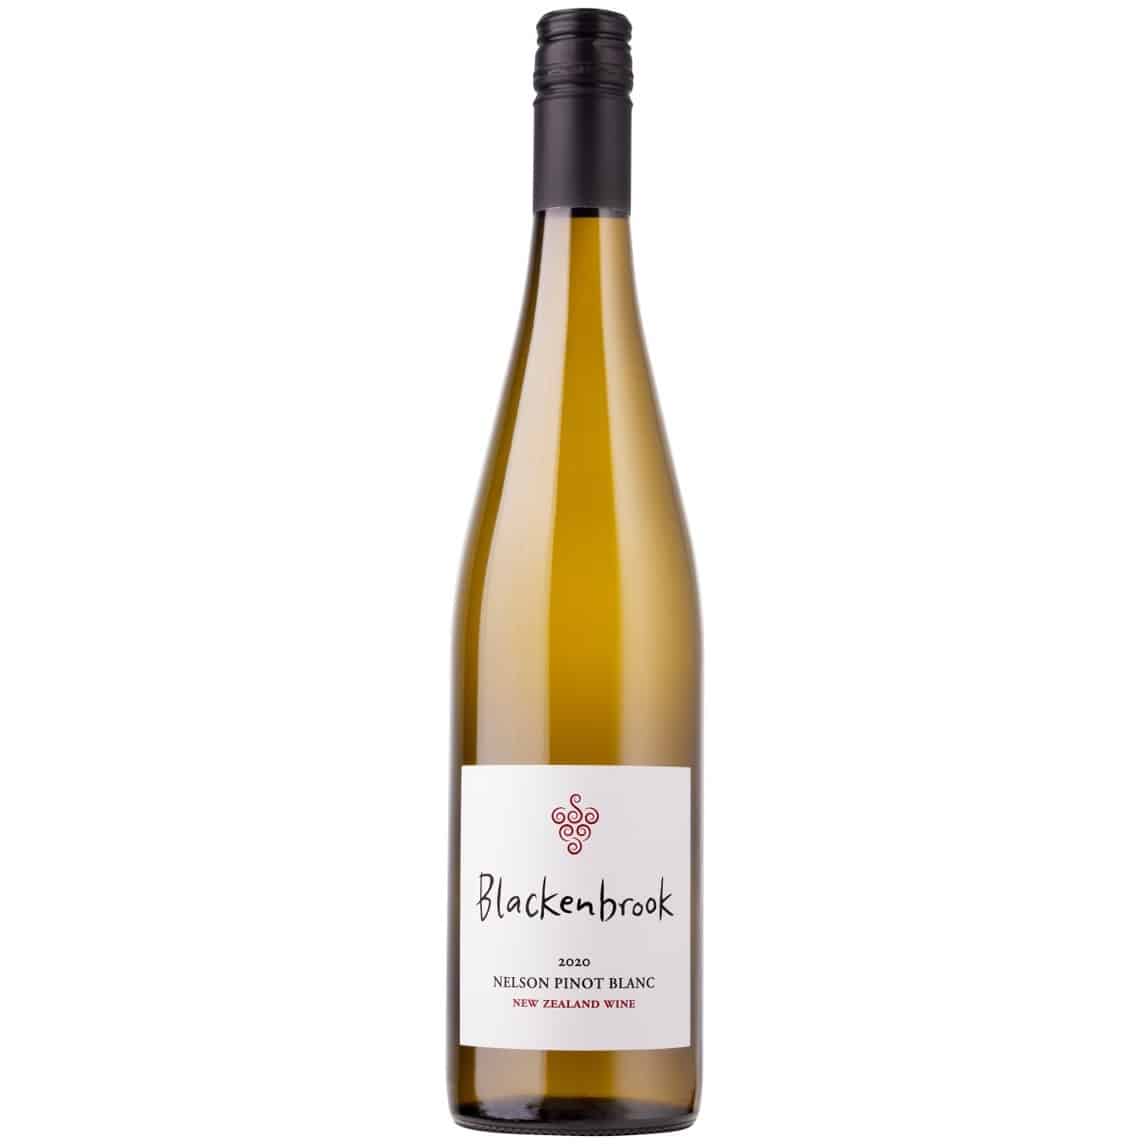 Blackenbrook Pinot Blanc 2020